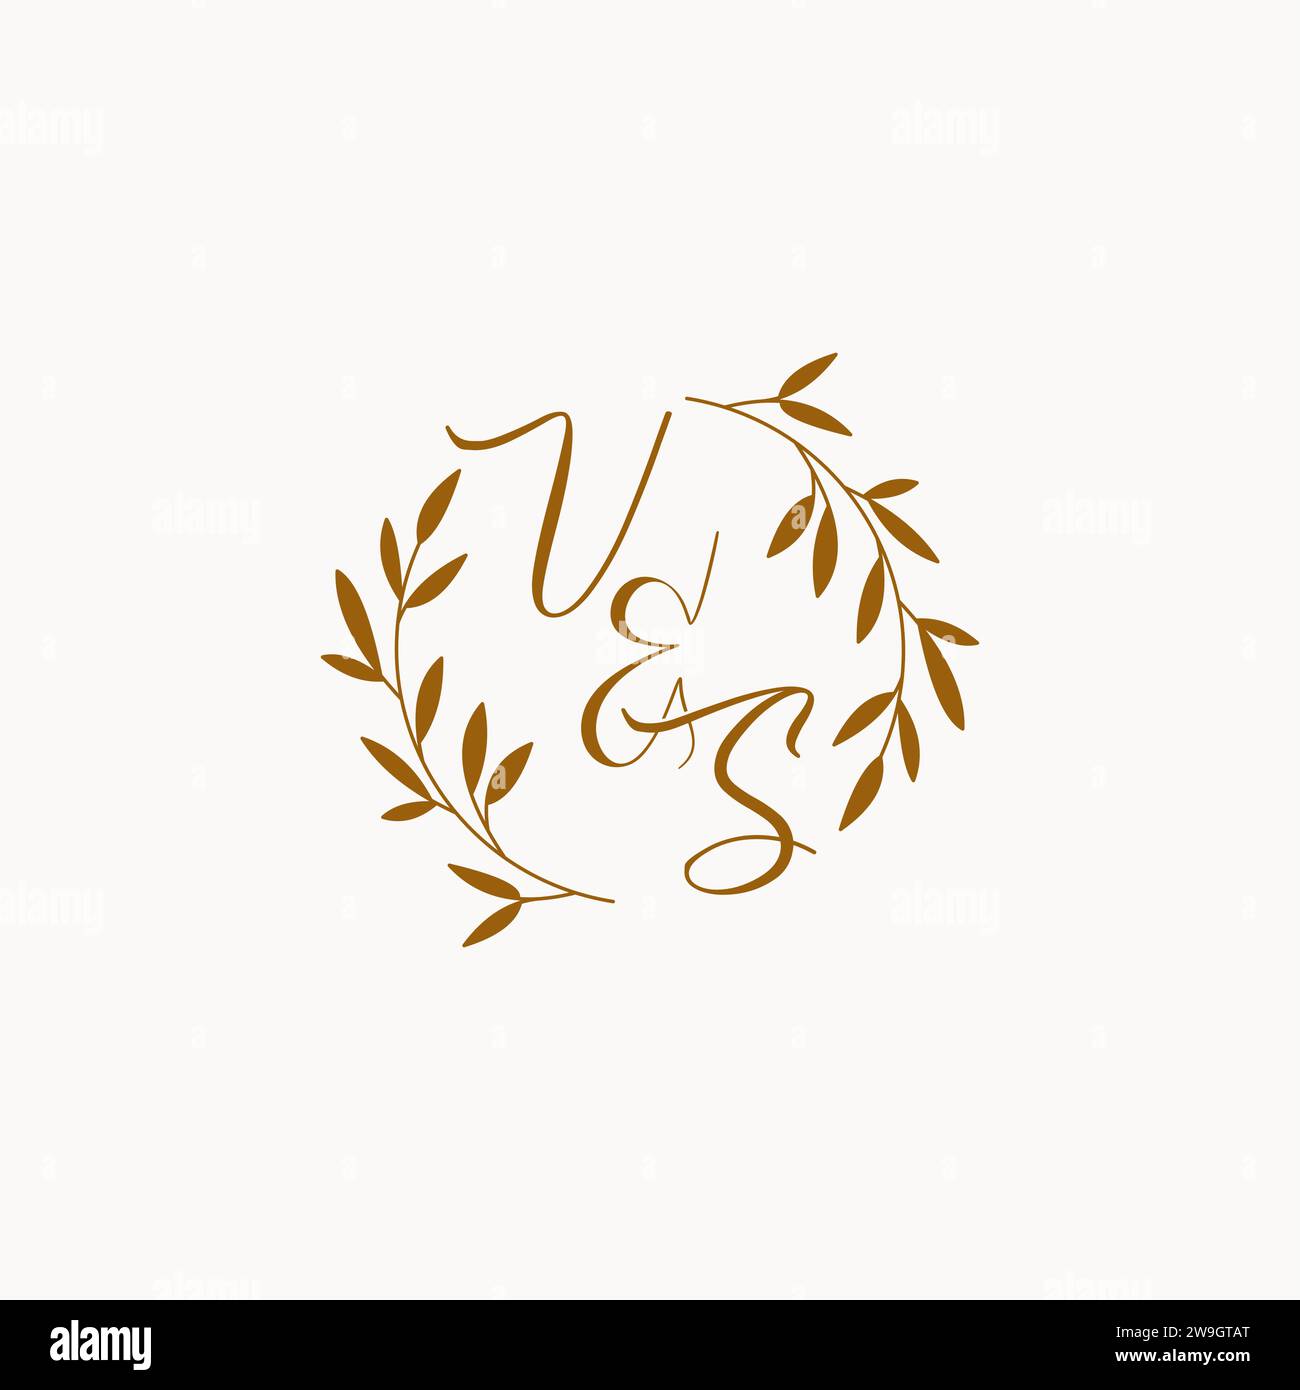 VS initial wedding monogram logo design Stock Vector